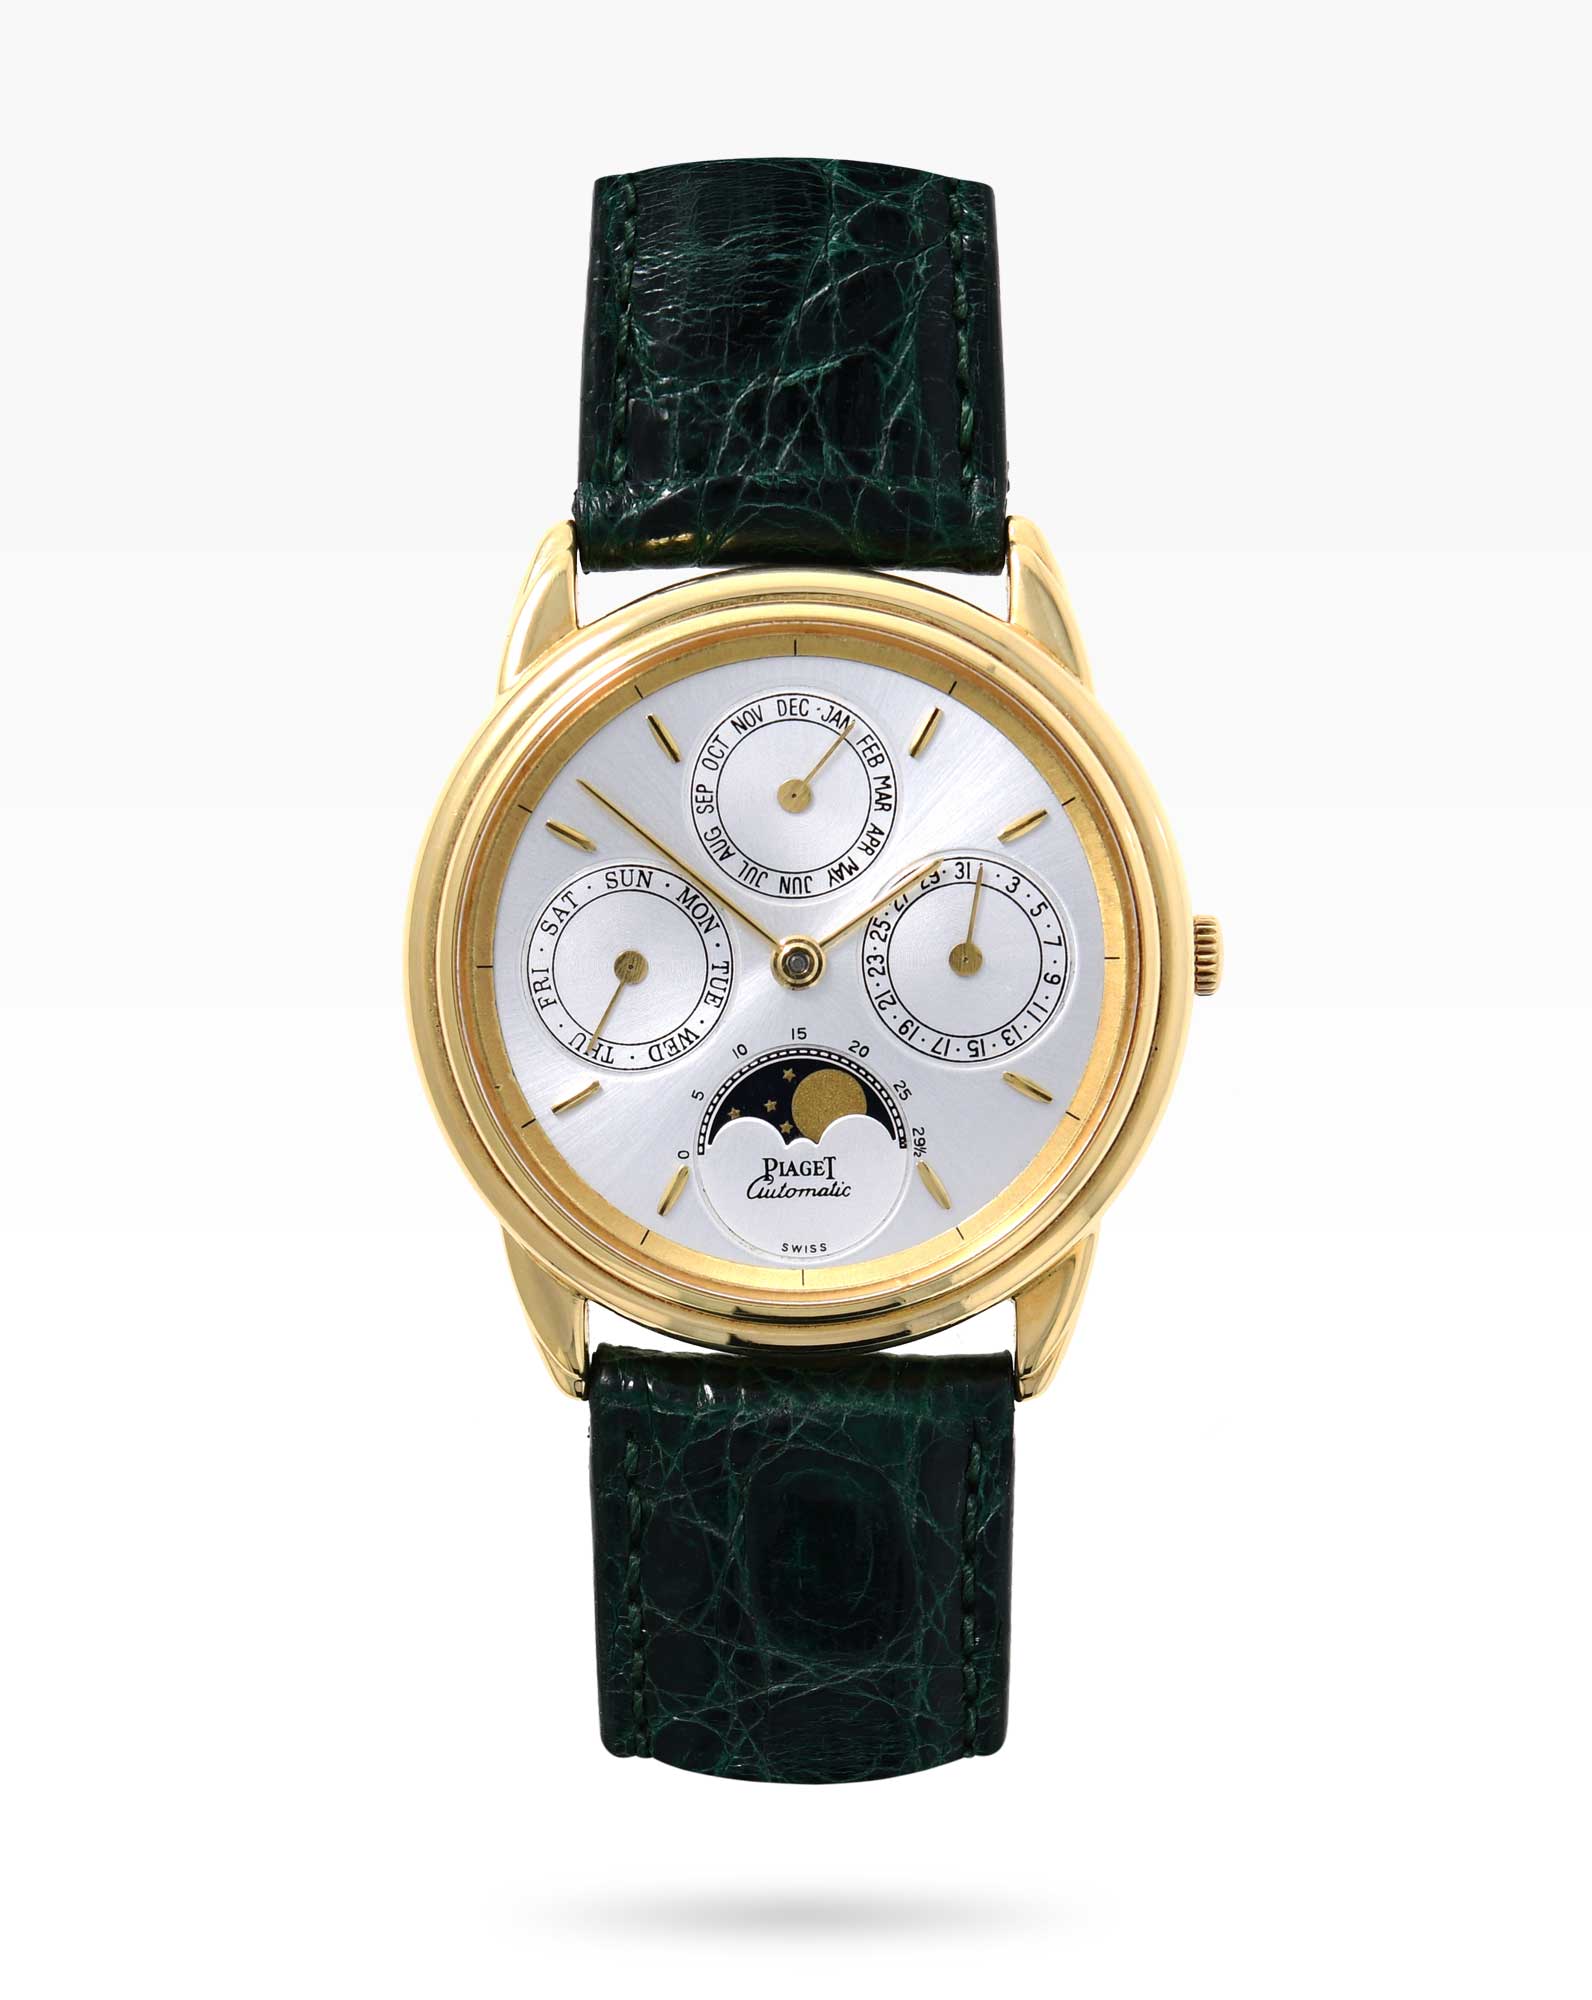 Piaget Gouverneur Ref15958-2ToneVintage Watches